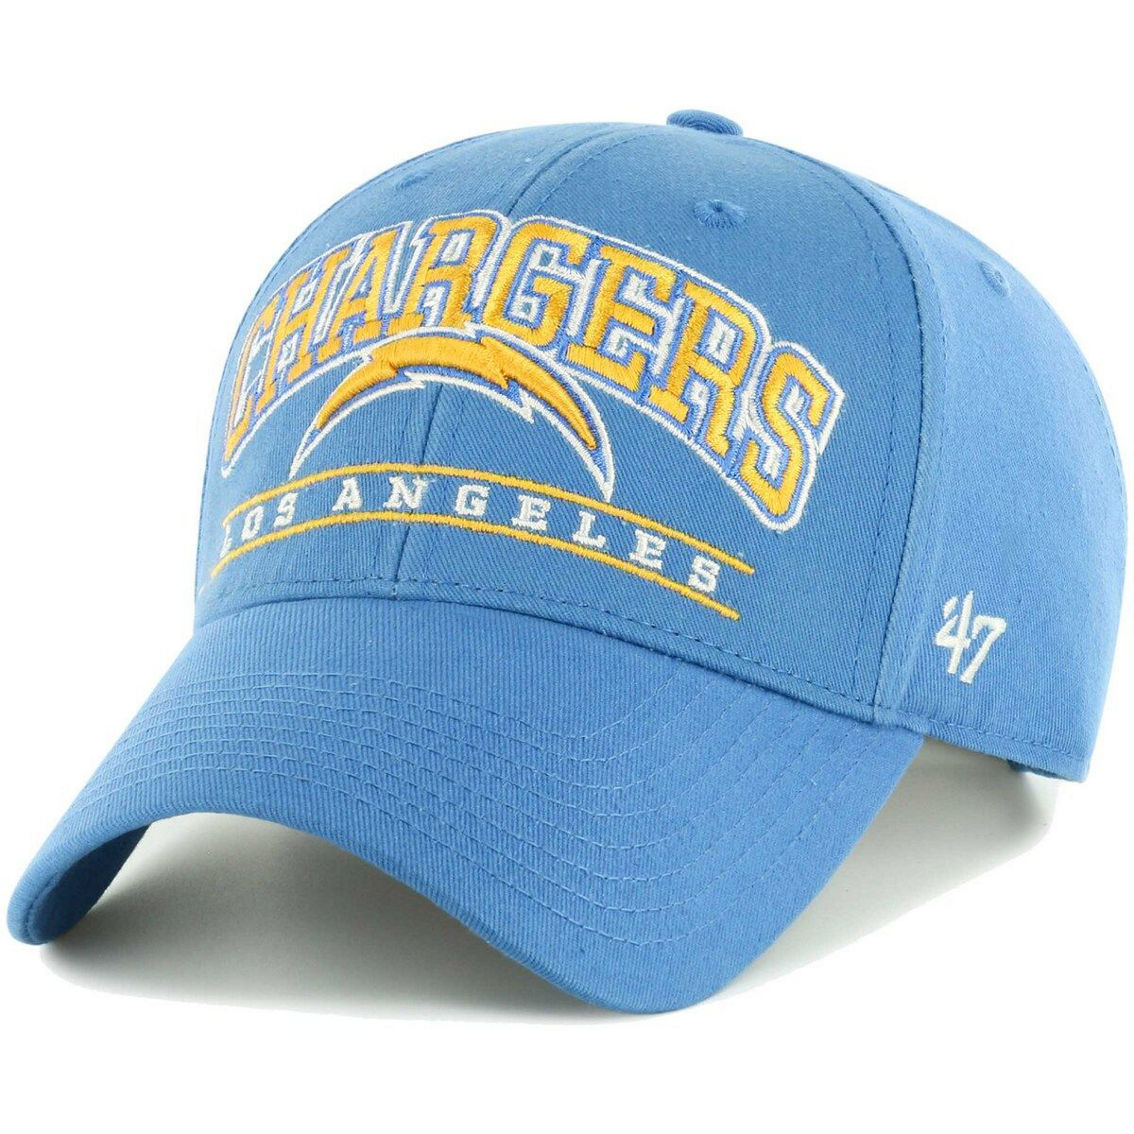 '47 Men's Powder Blue Los Angeles Chargers Fletcher MVP Adjustable Hat - Image 2 of 4